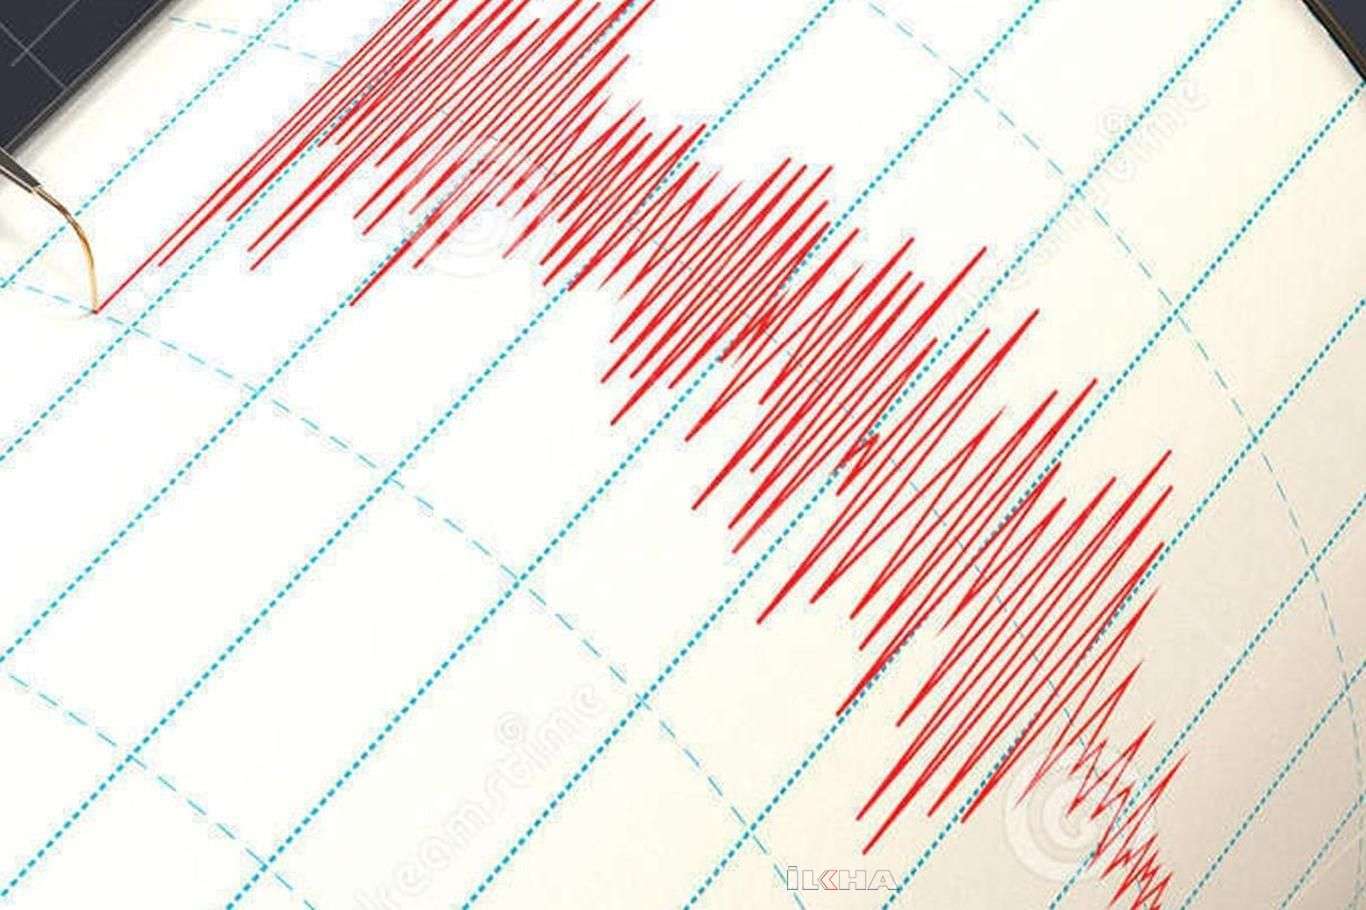 A 3.8 magnitude earthquake shakes eastern Turkey